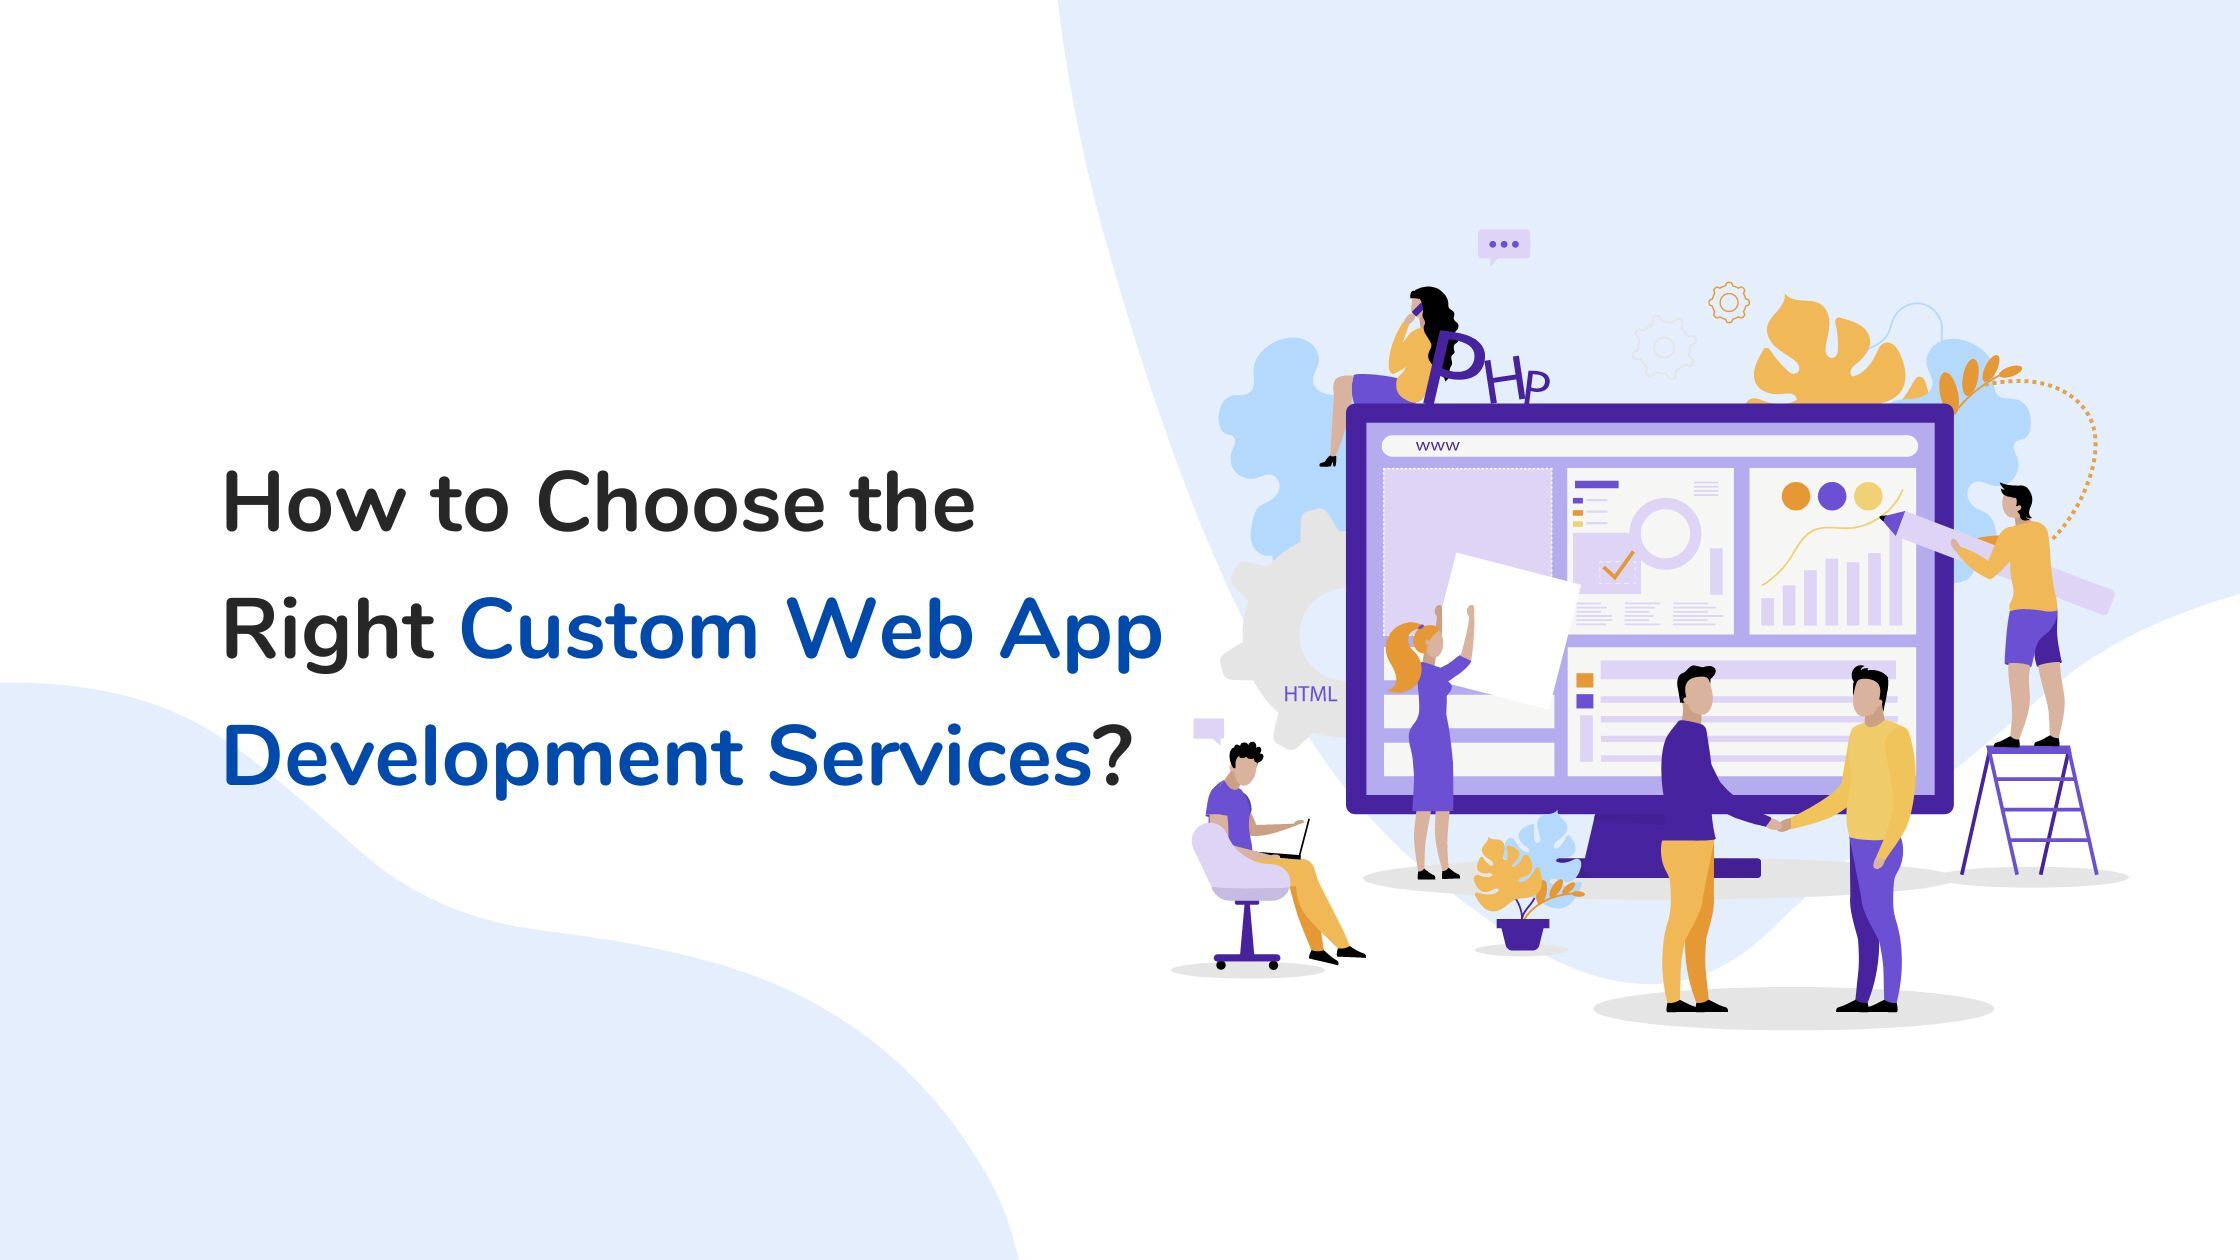 Design of custom web app development services